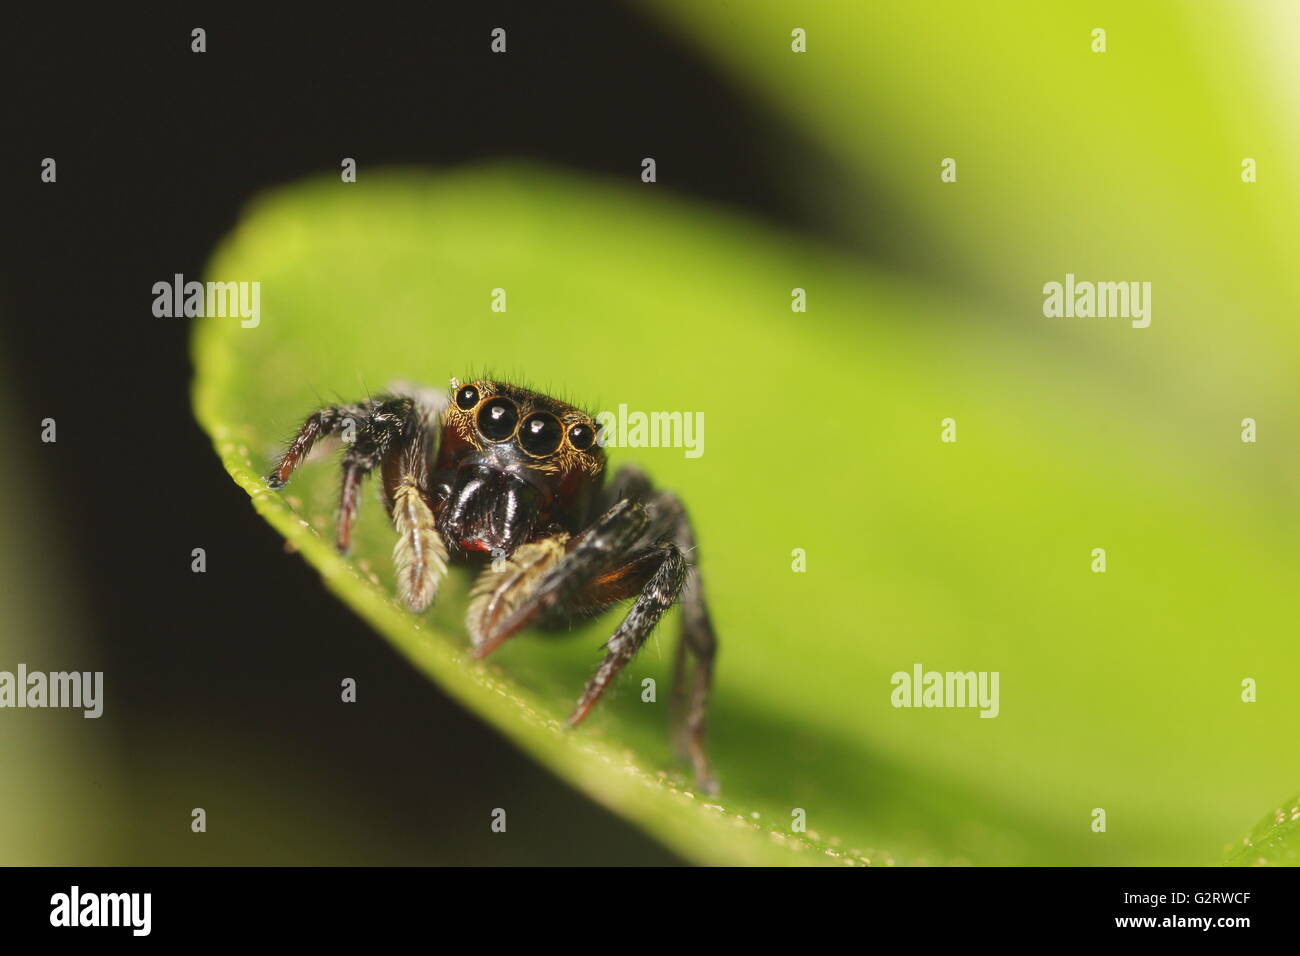 Brown jumping spider mostrando sus colmillos, o chelicerae jackknife. Foto de stock